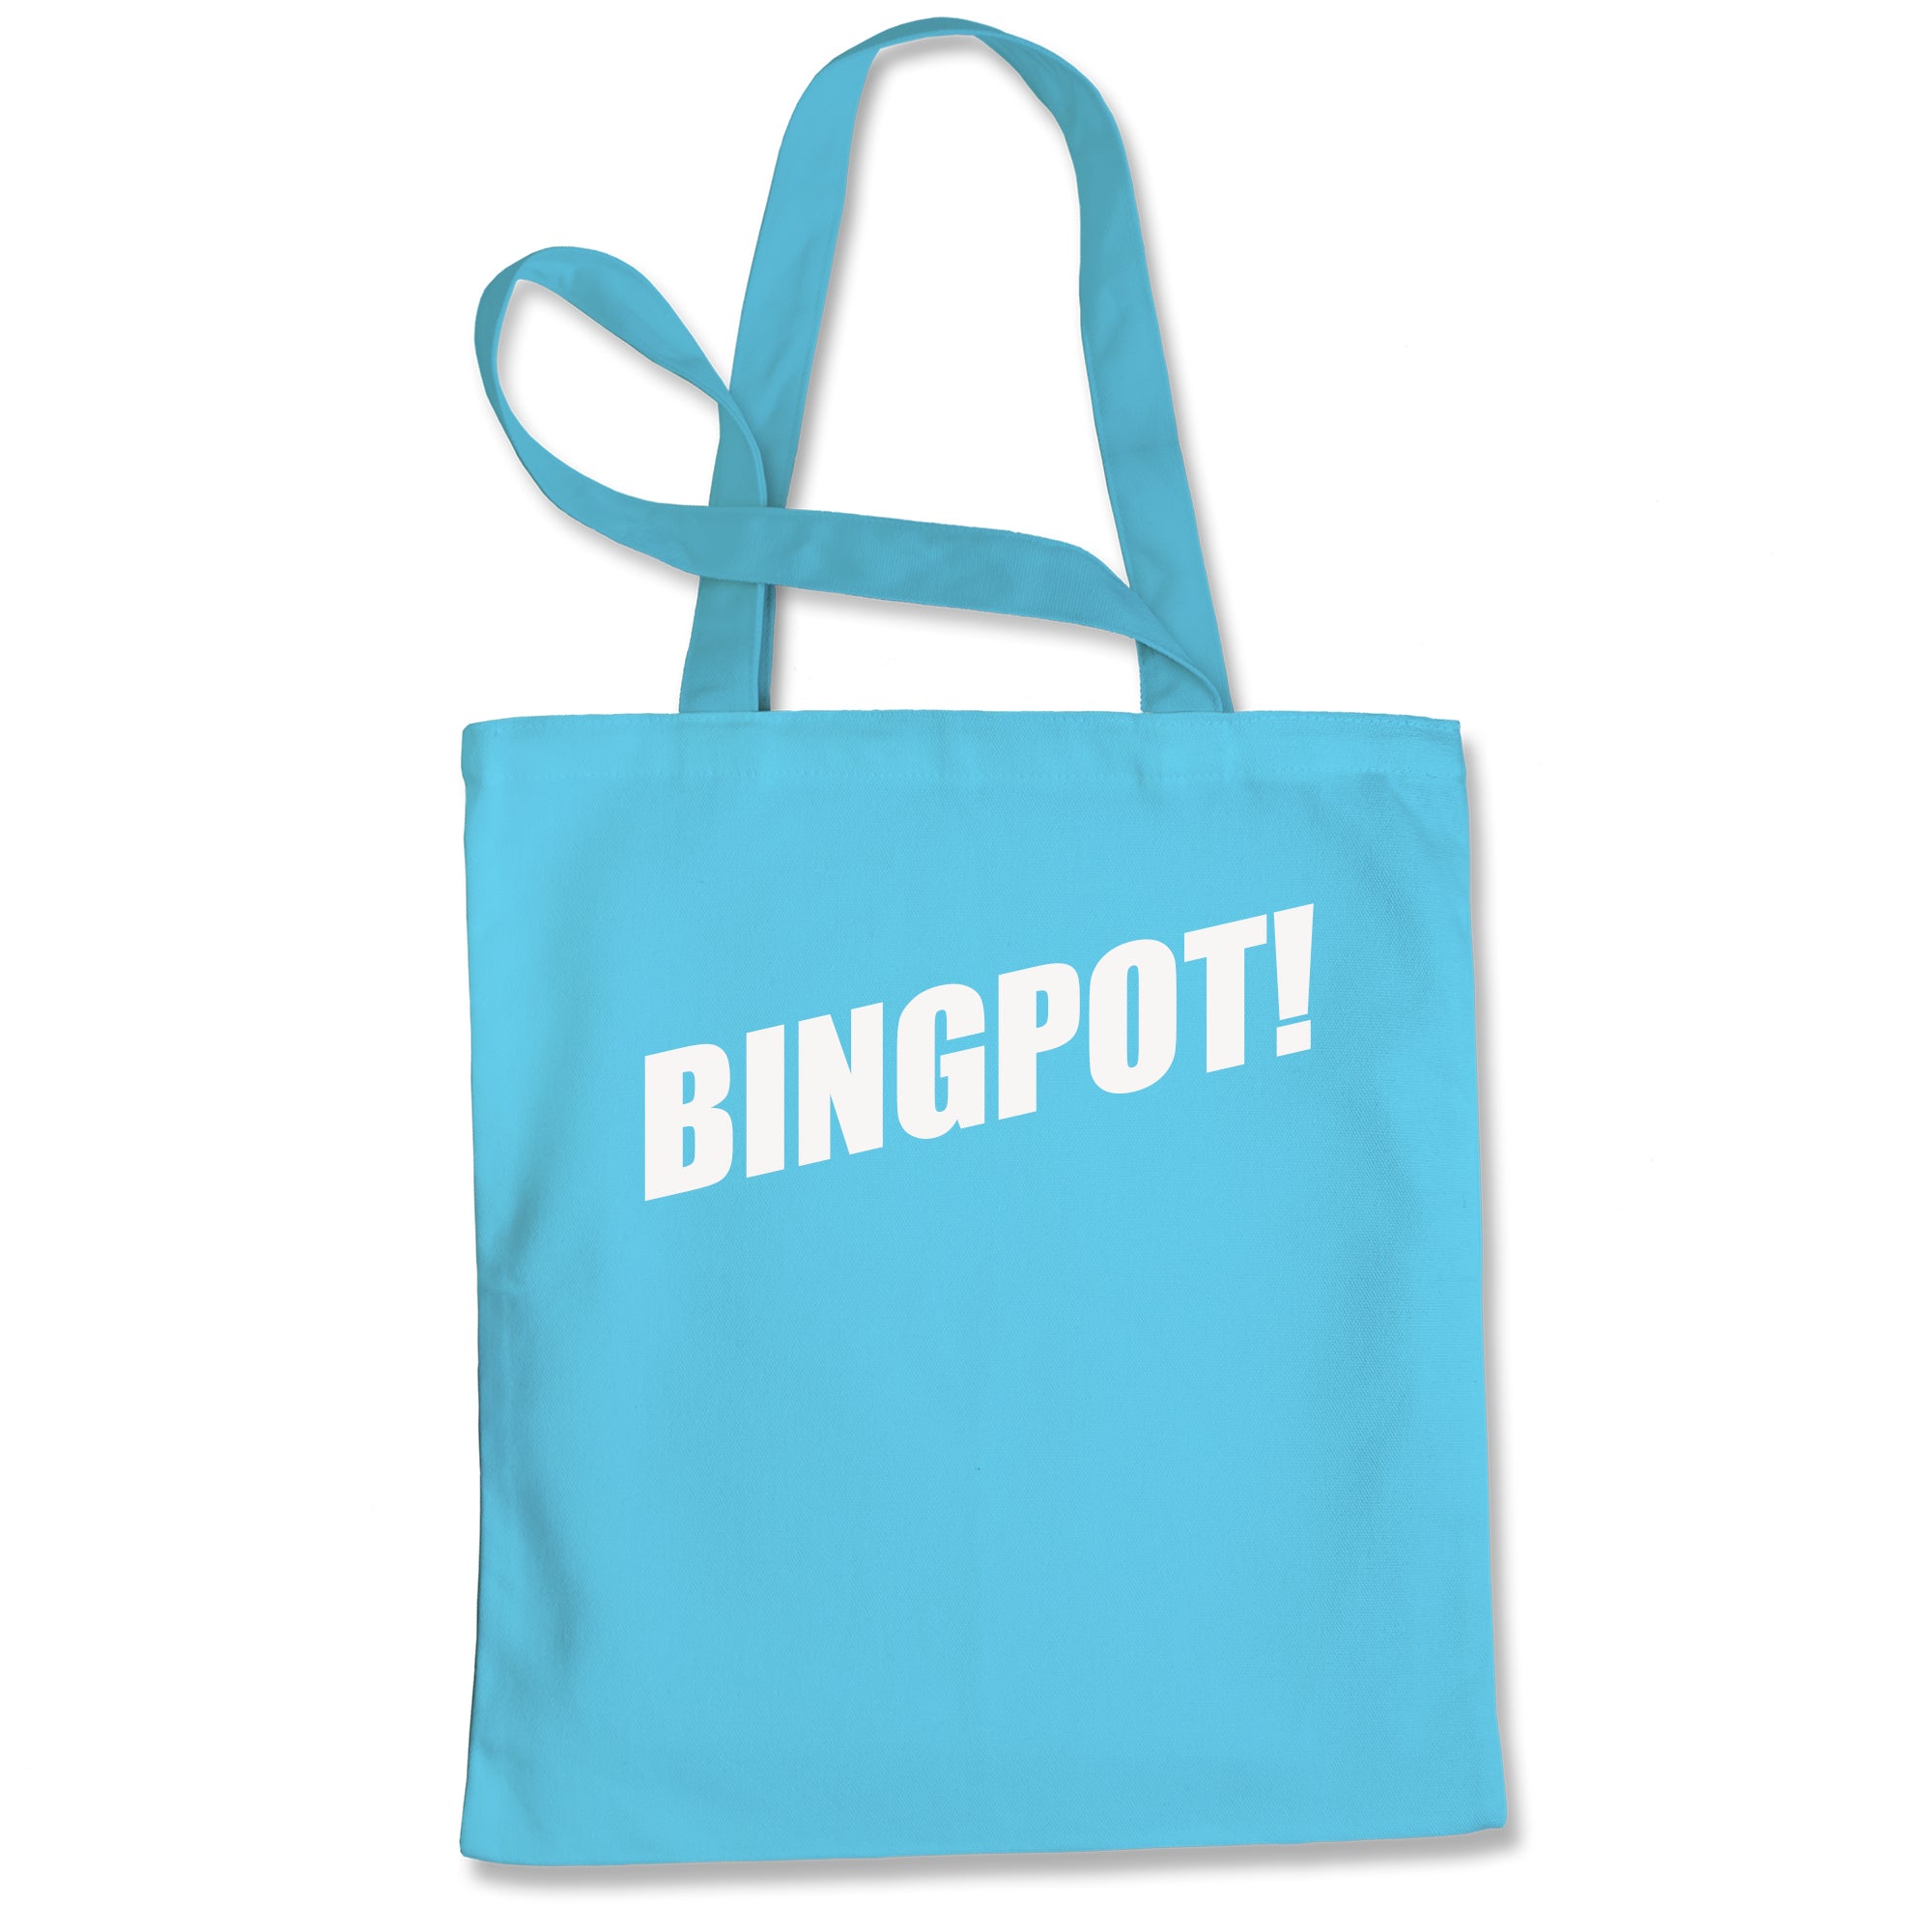 Bingpot! Funny Brooklyn 99 Tote Bag